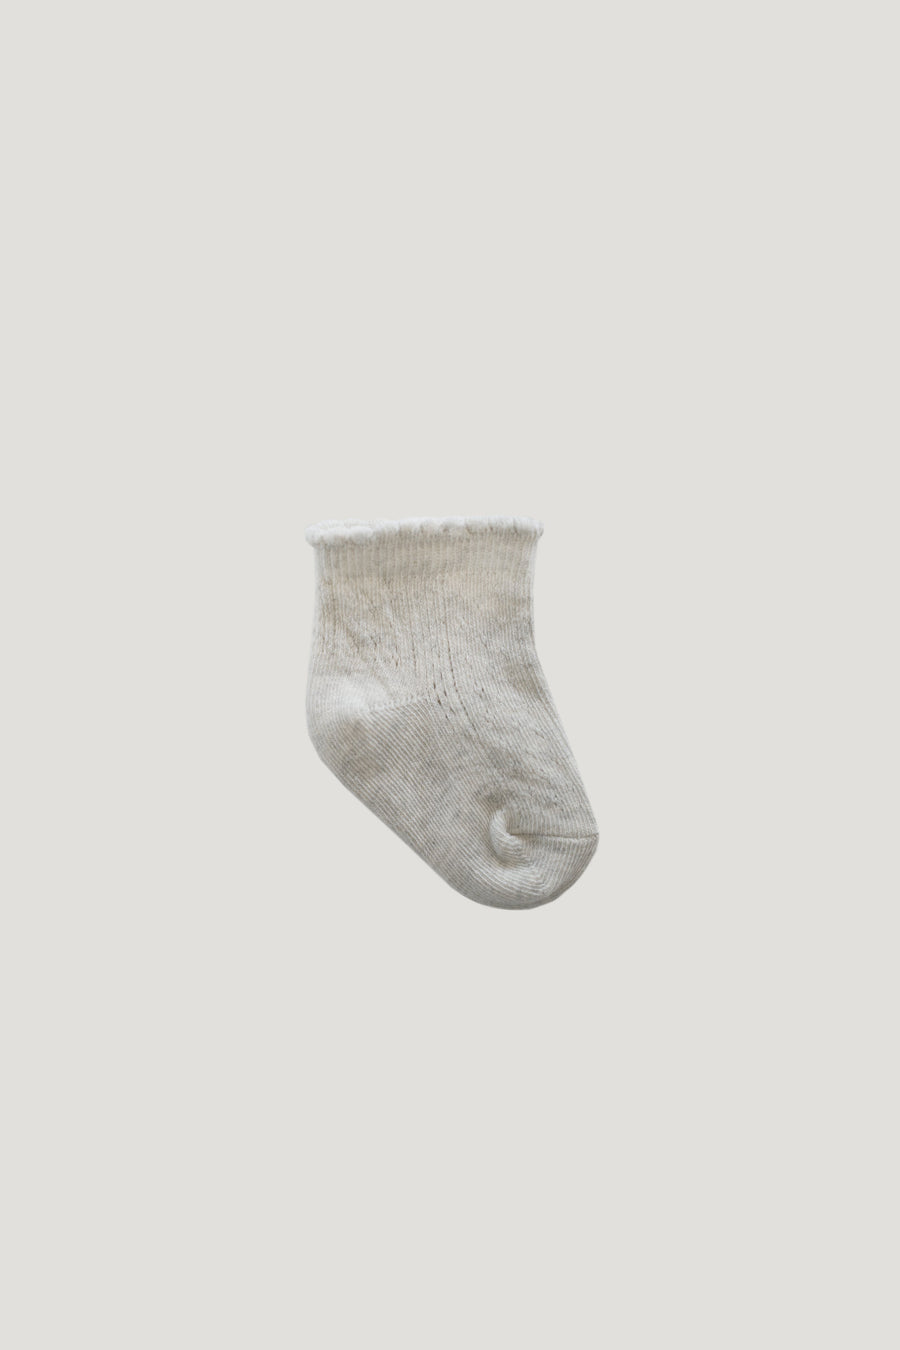 Jamie Kay - Lace Sock - Oatmeal Grey